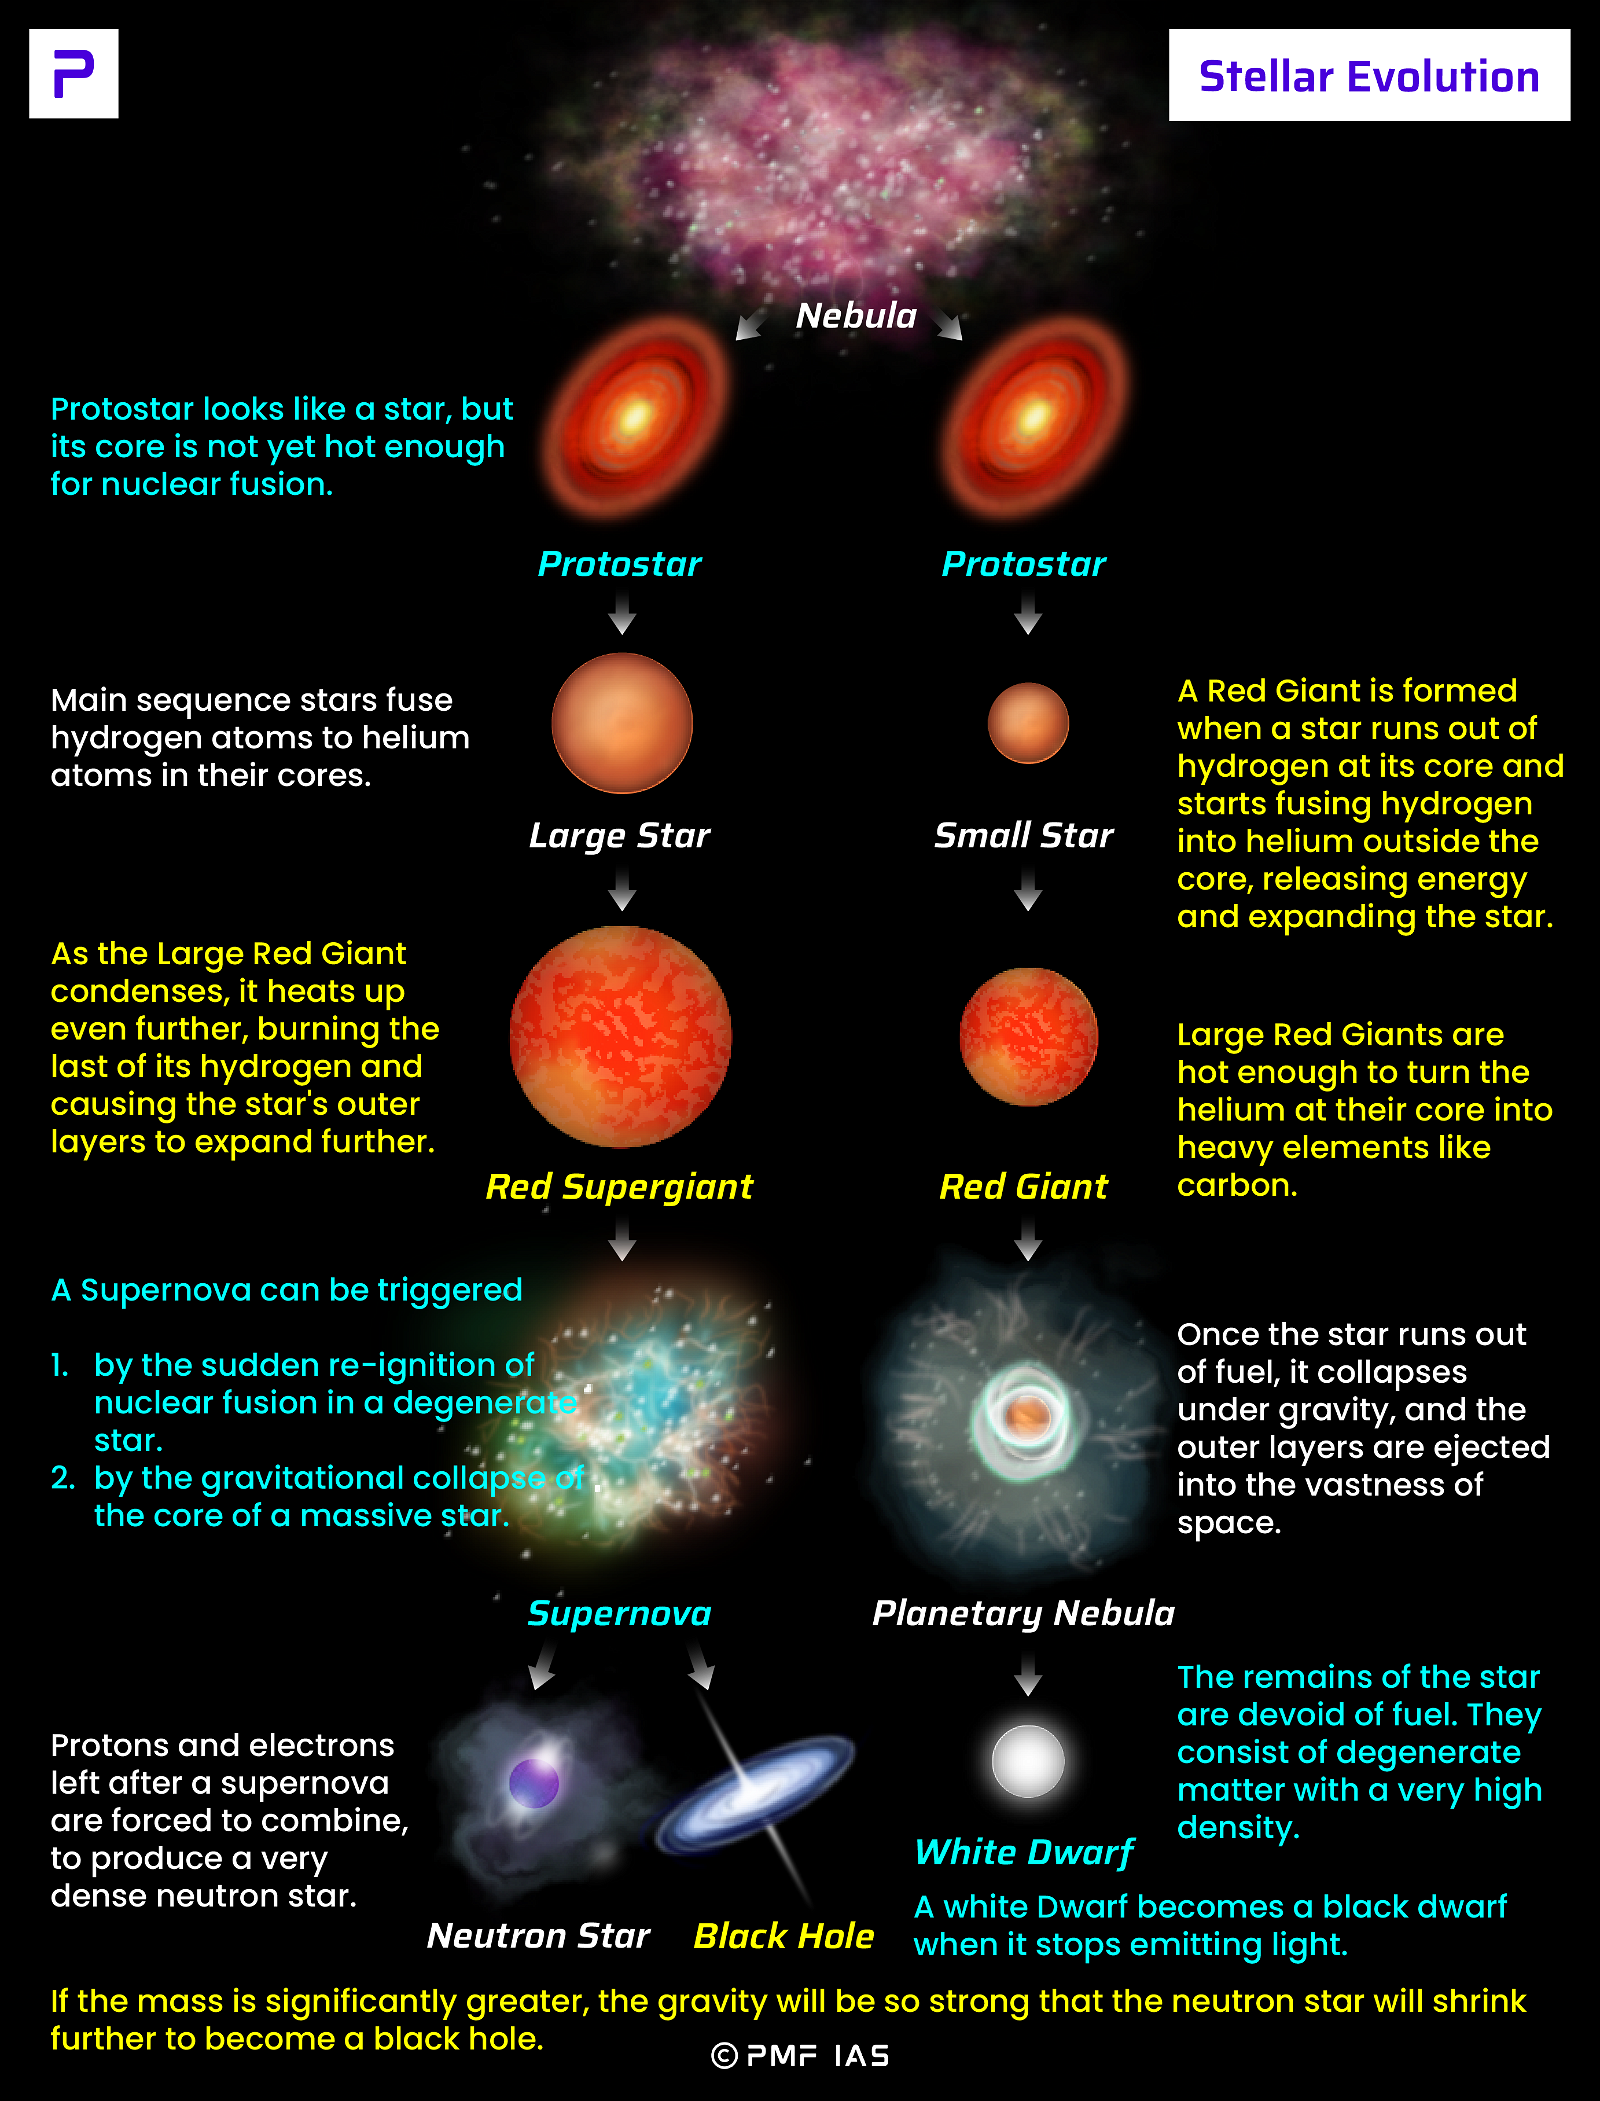 Star Formation (Stellar Evolution or Life Cycle of a Star) - Nebula - Protostar - Red Giant - Planetary Nebula - Supernova - White Dwarf - Neutron Star - Black Hole